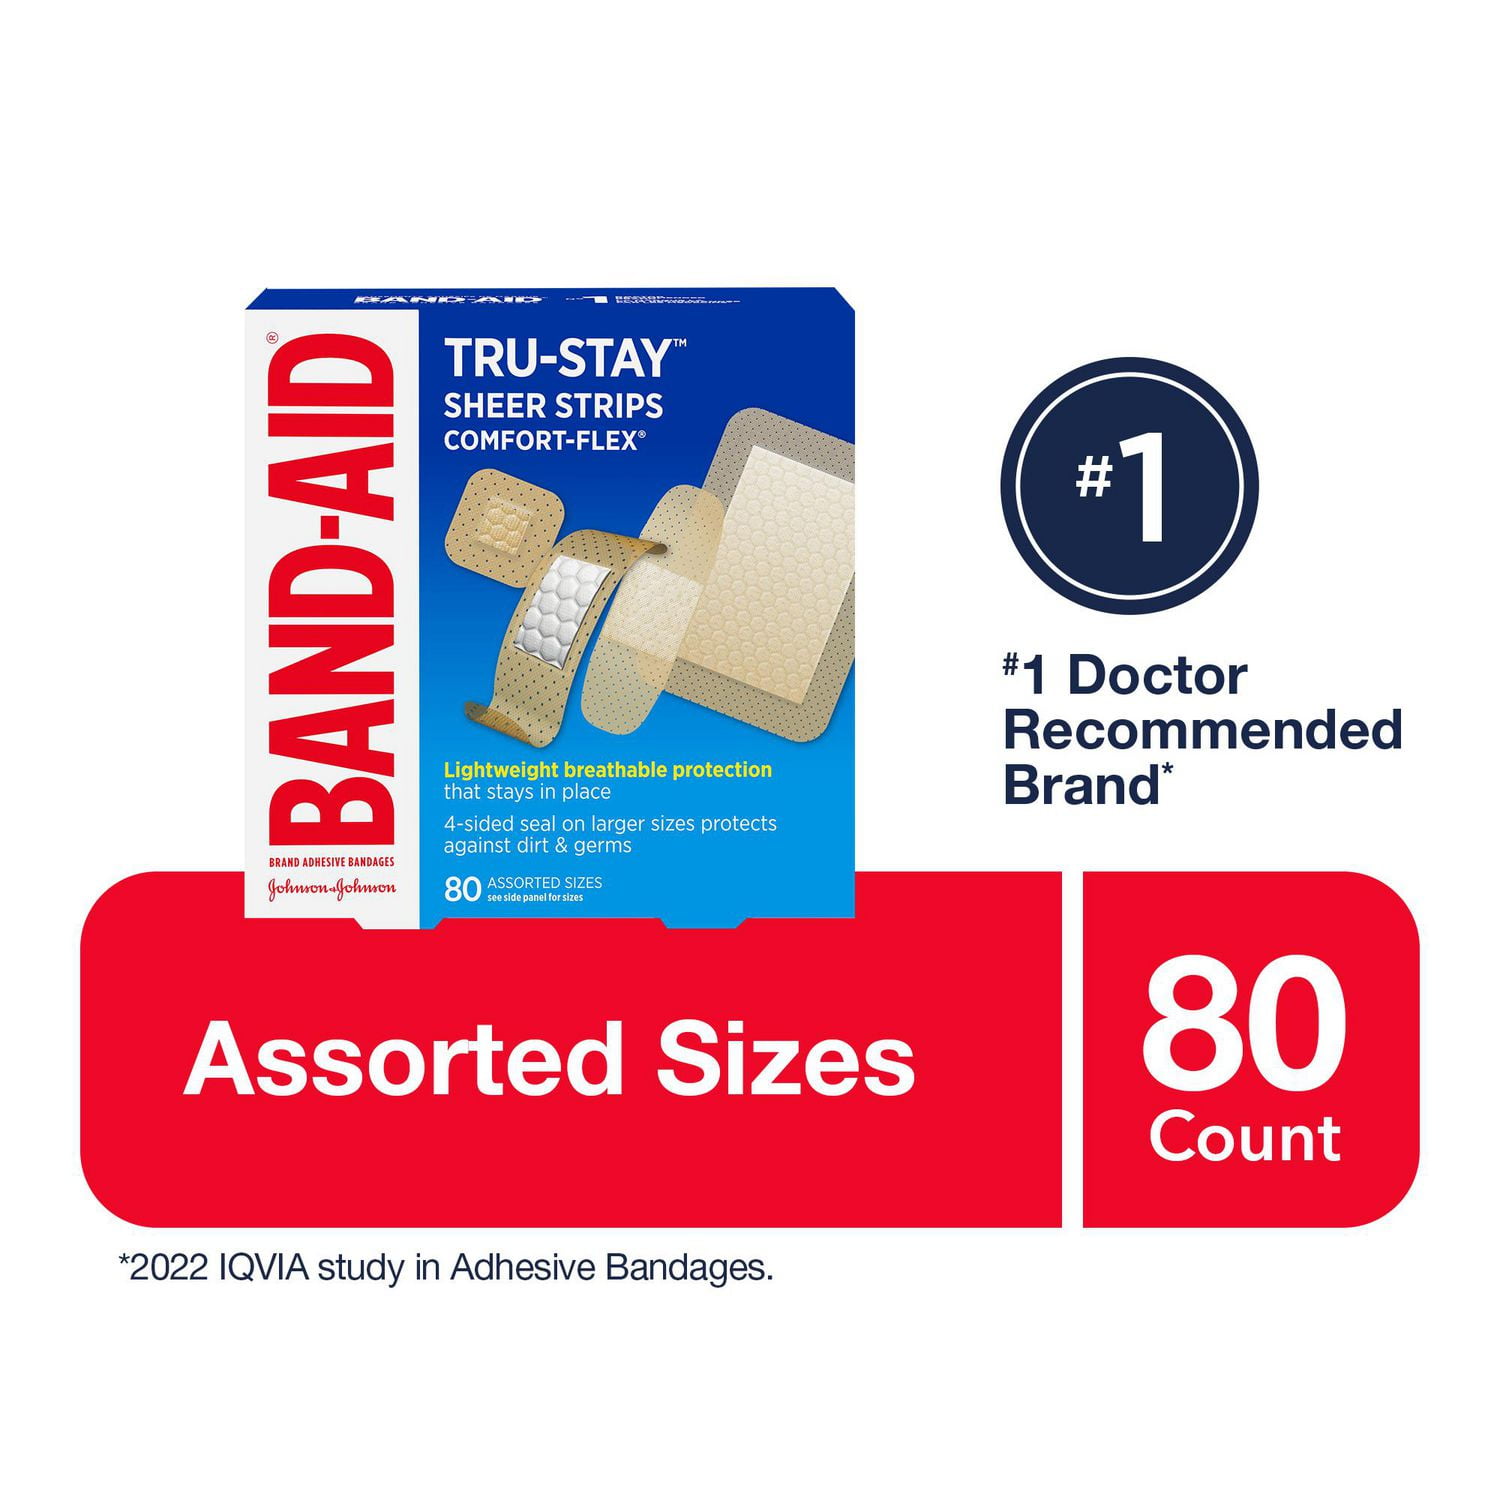 BAND-AID® Brand TRU-STAY™ Sheer Strips COMFORT-FLEX® Adhesive